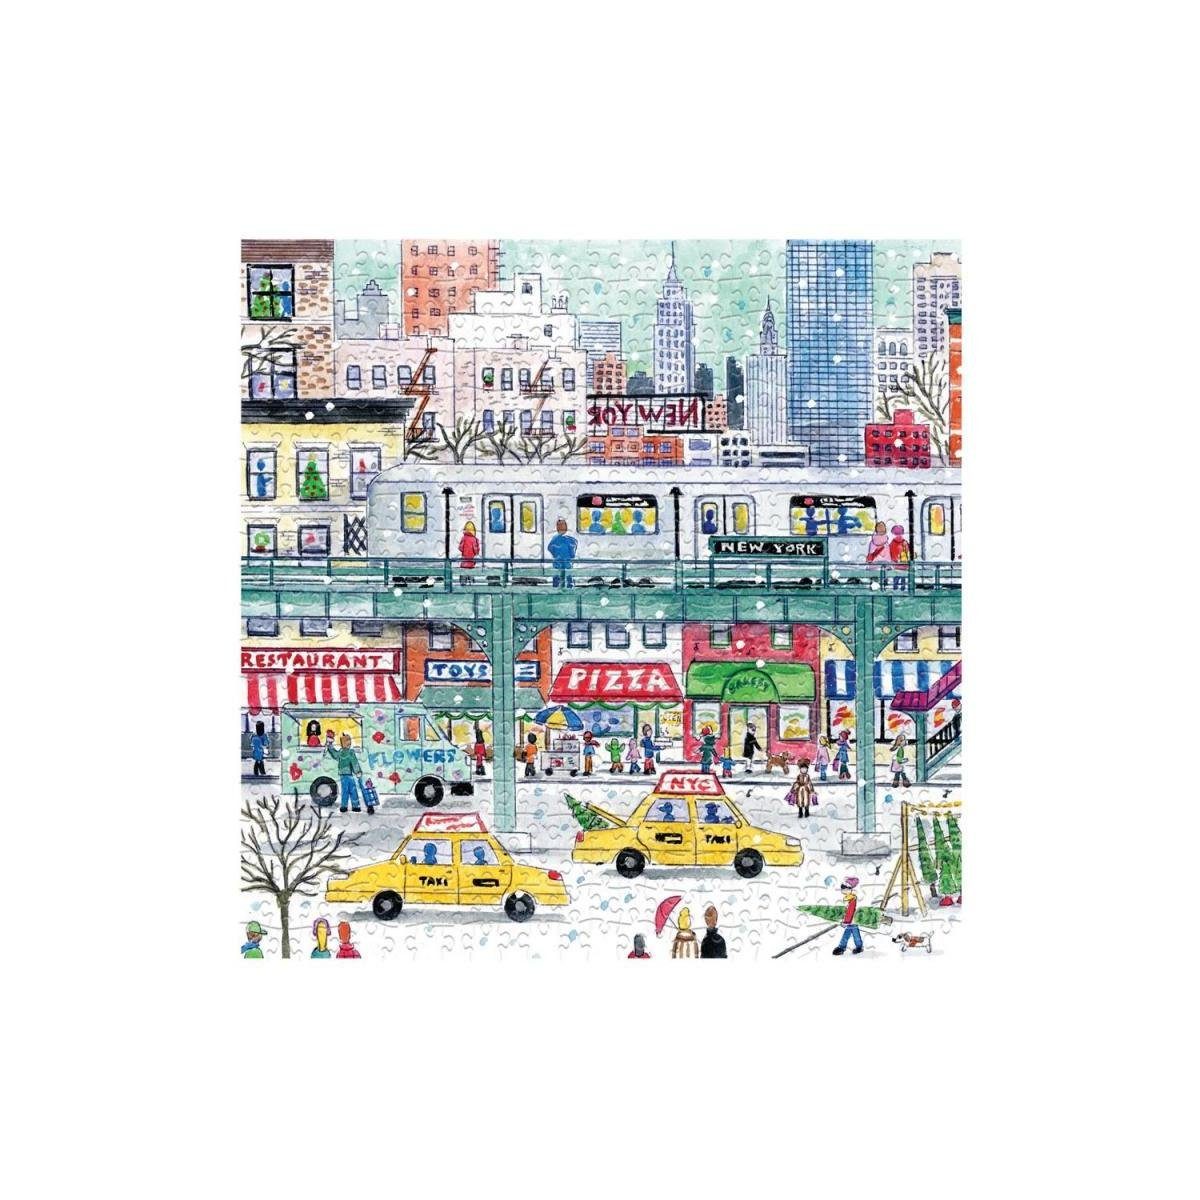 - - Subway abrams&chronicle Storrings Puzzleteile 53091 Puzzle,..., Michael Puzzle New City York 500